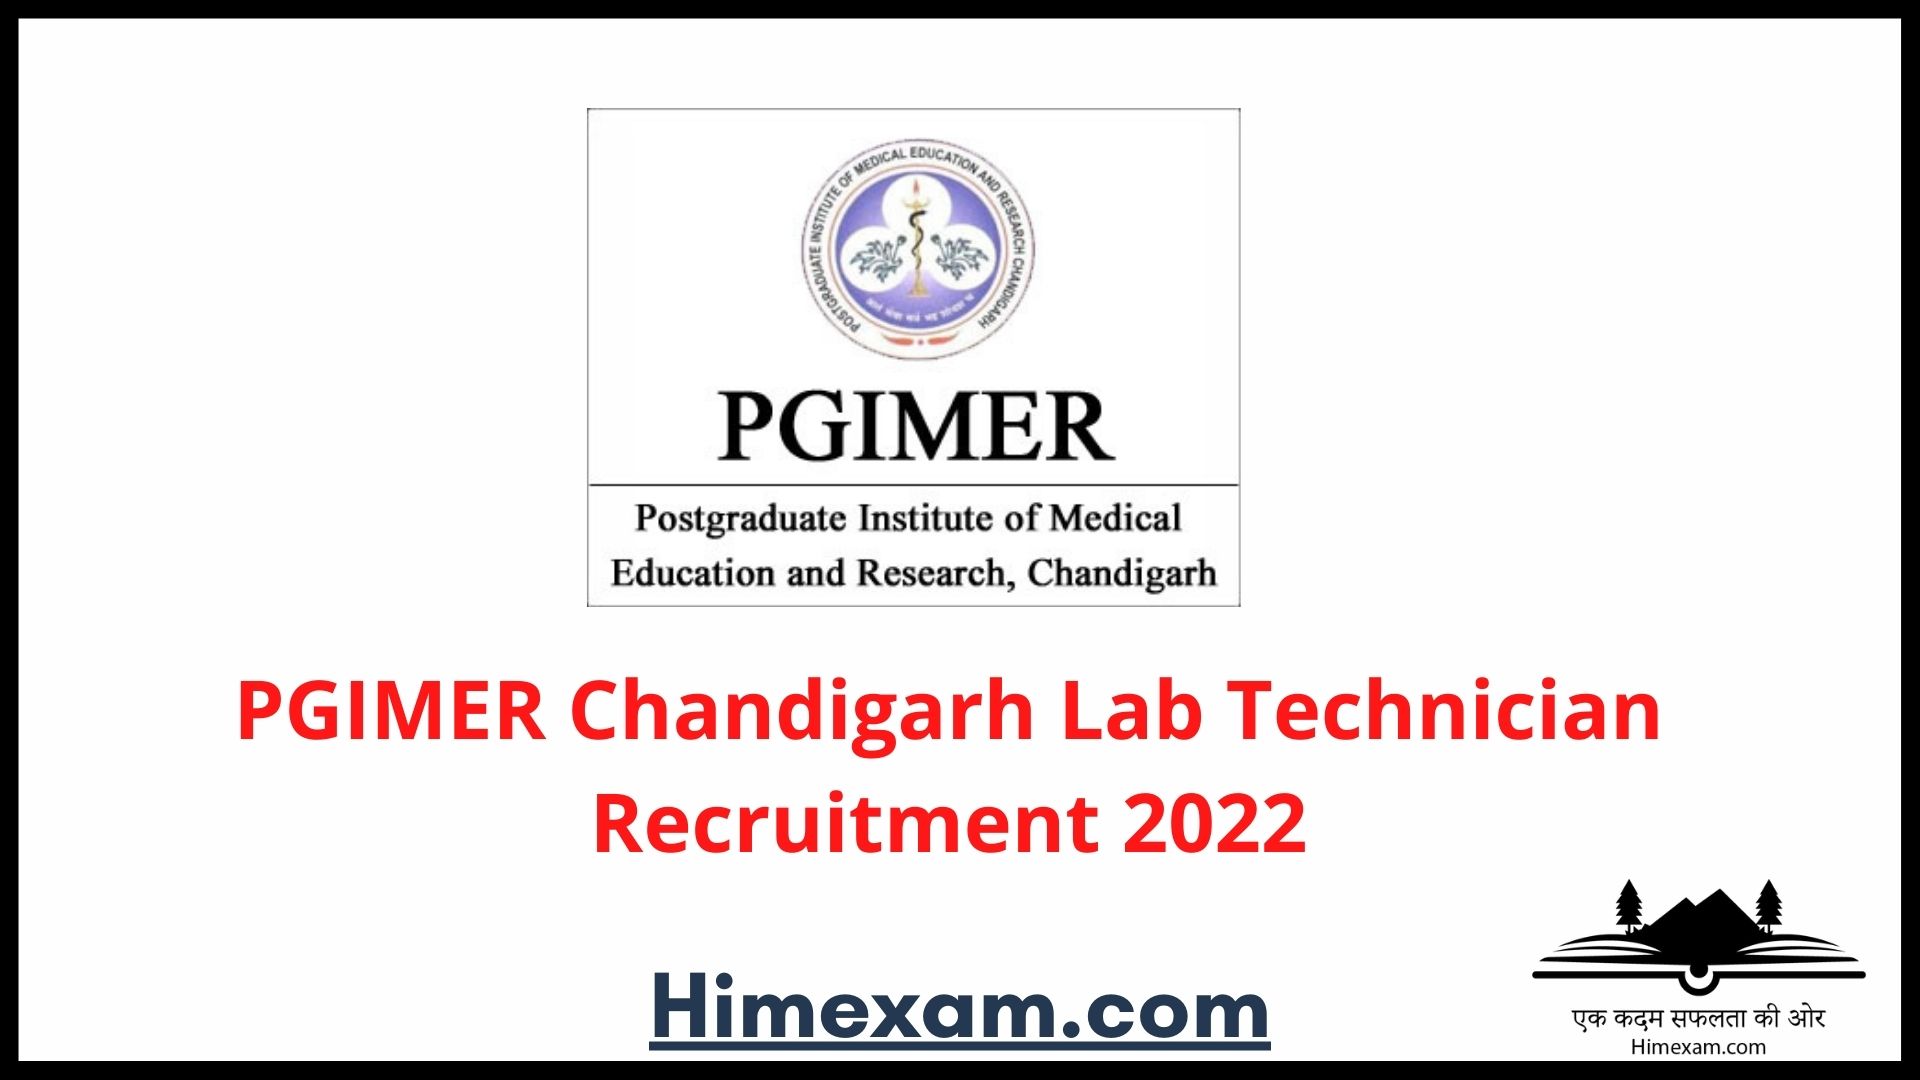 PGIMER Chandigarh Lab Technician Recruitment 2022